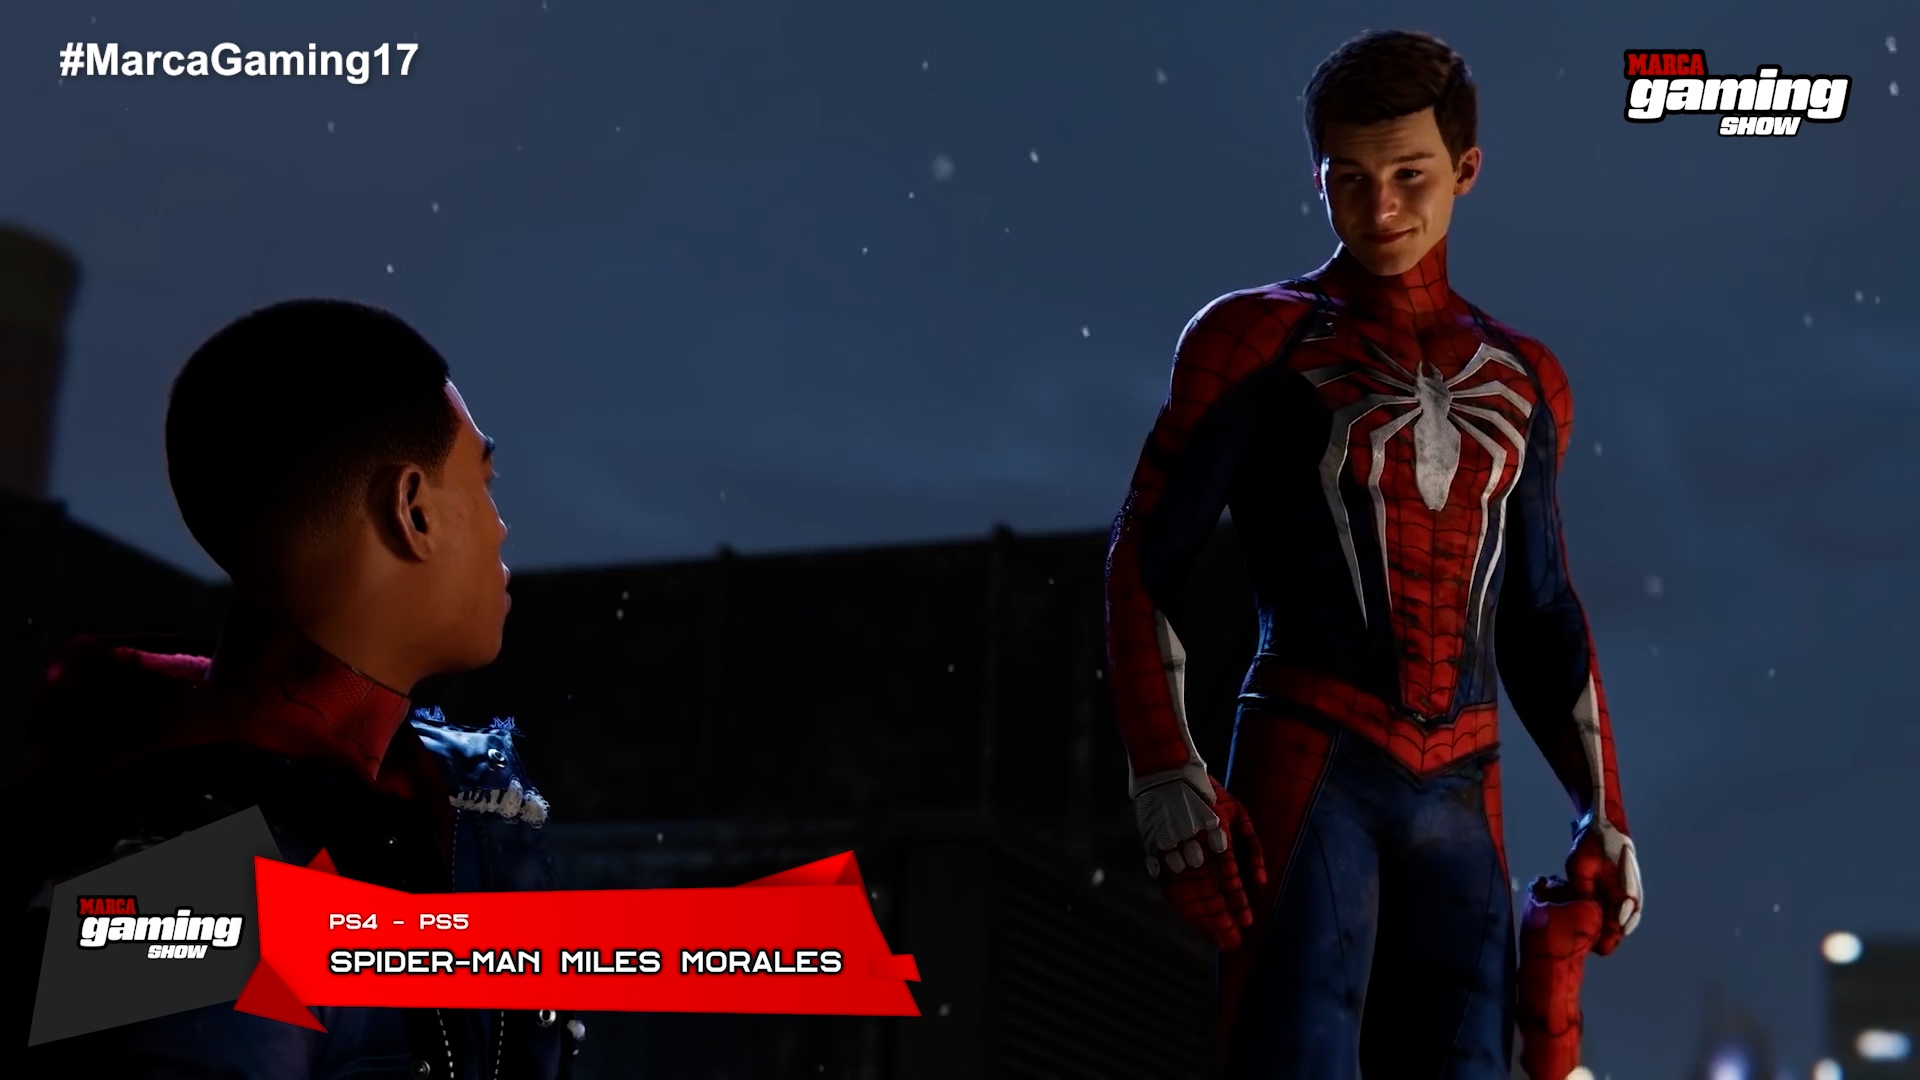 Spider-Man Miles Morales (PS4 - PS5)